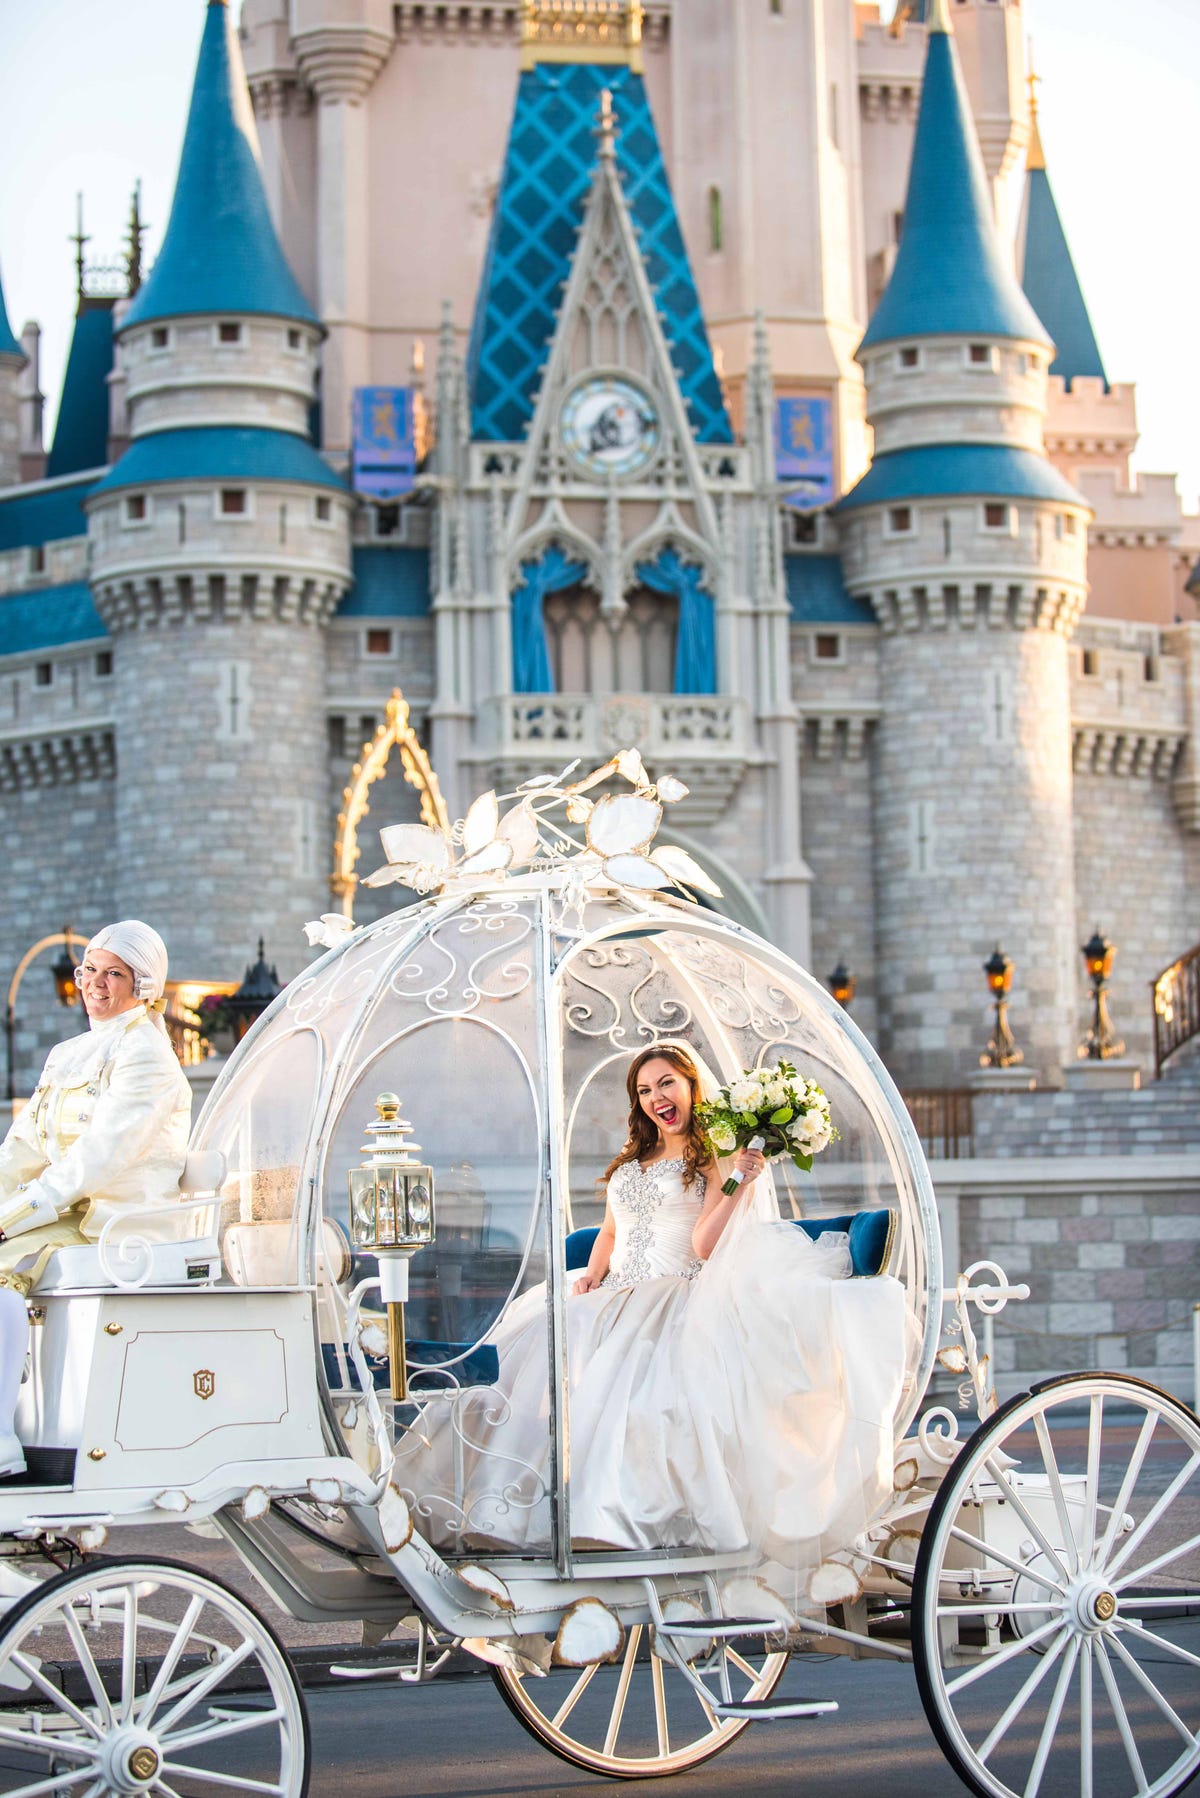 5: How Much Is A Disneyland Wedding